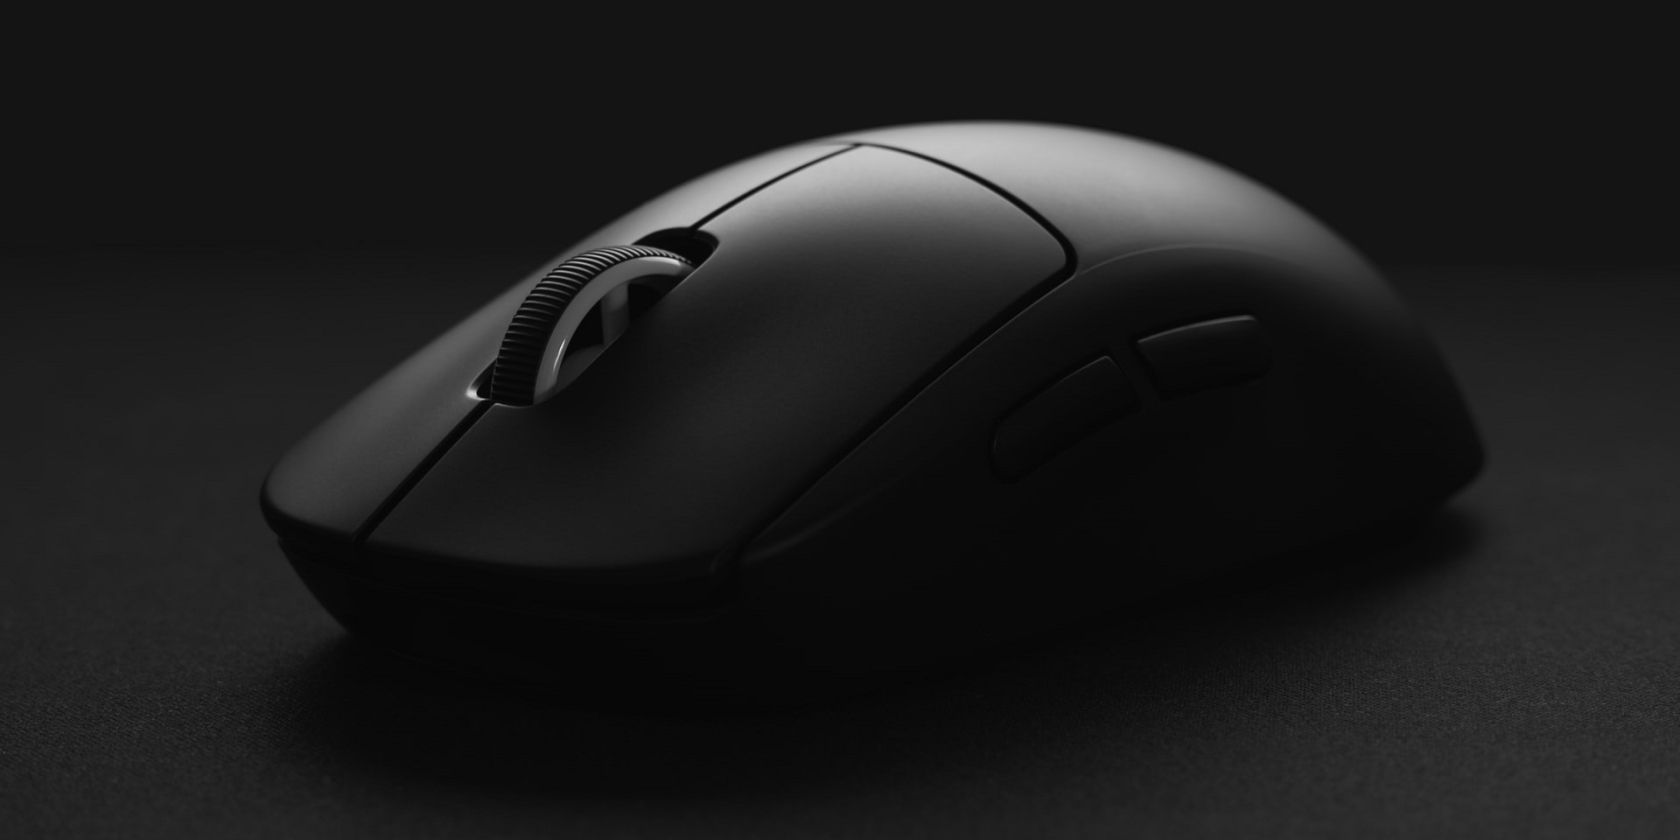  A black mouse against a black background